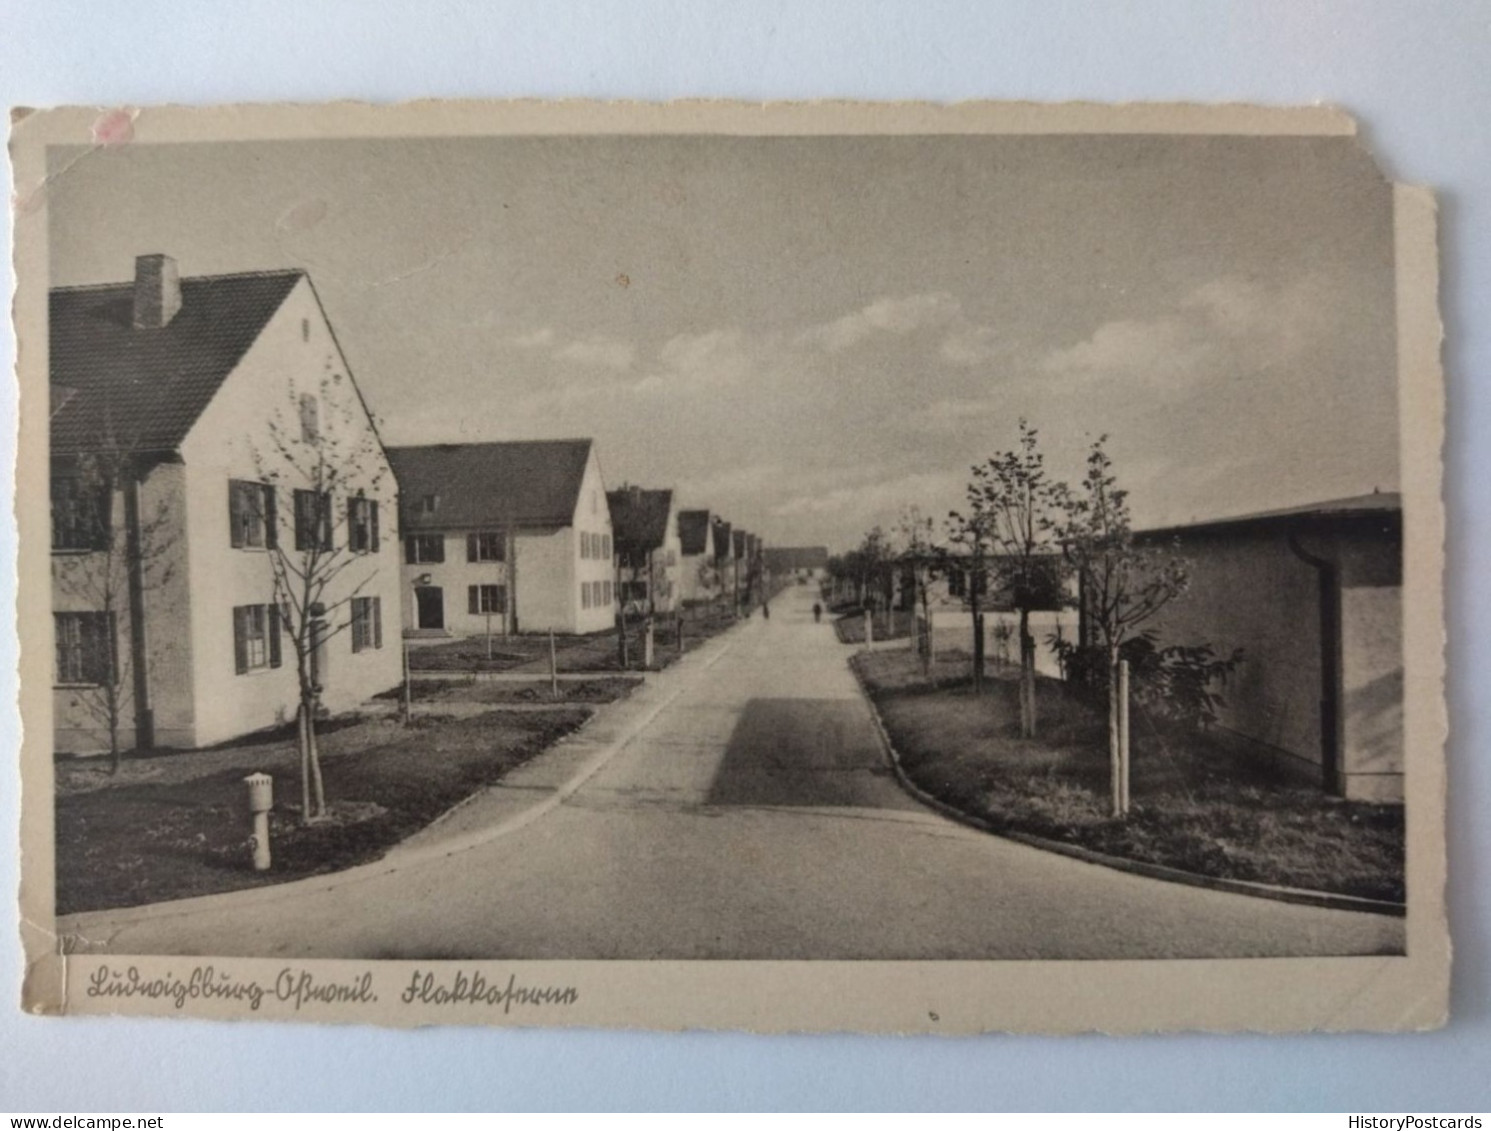 Ludwigsburg-Oßweil, Flakkaserne, 1940 - Ludwigsburg